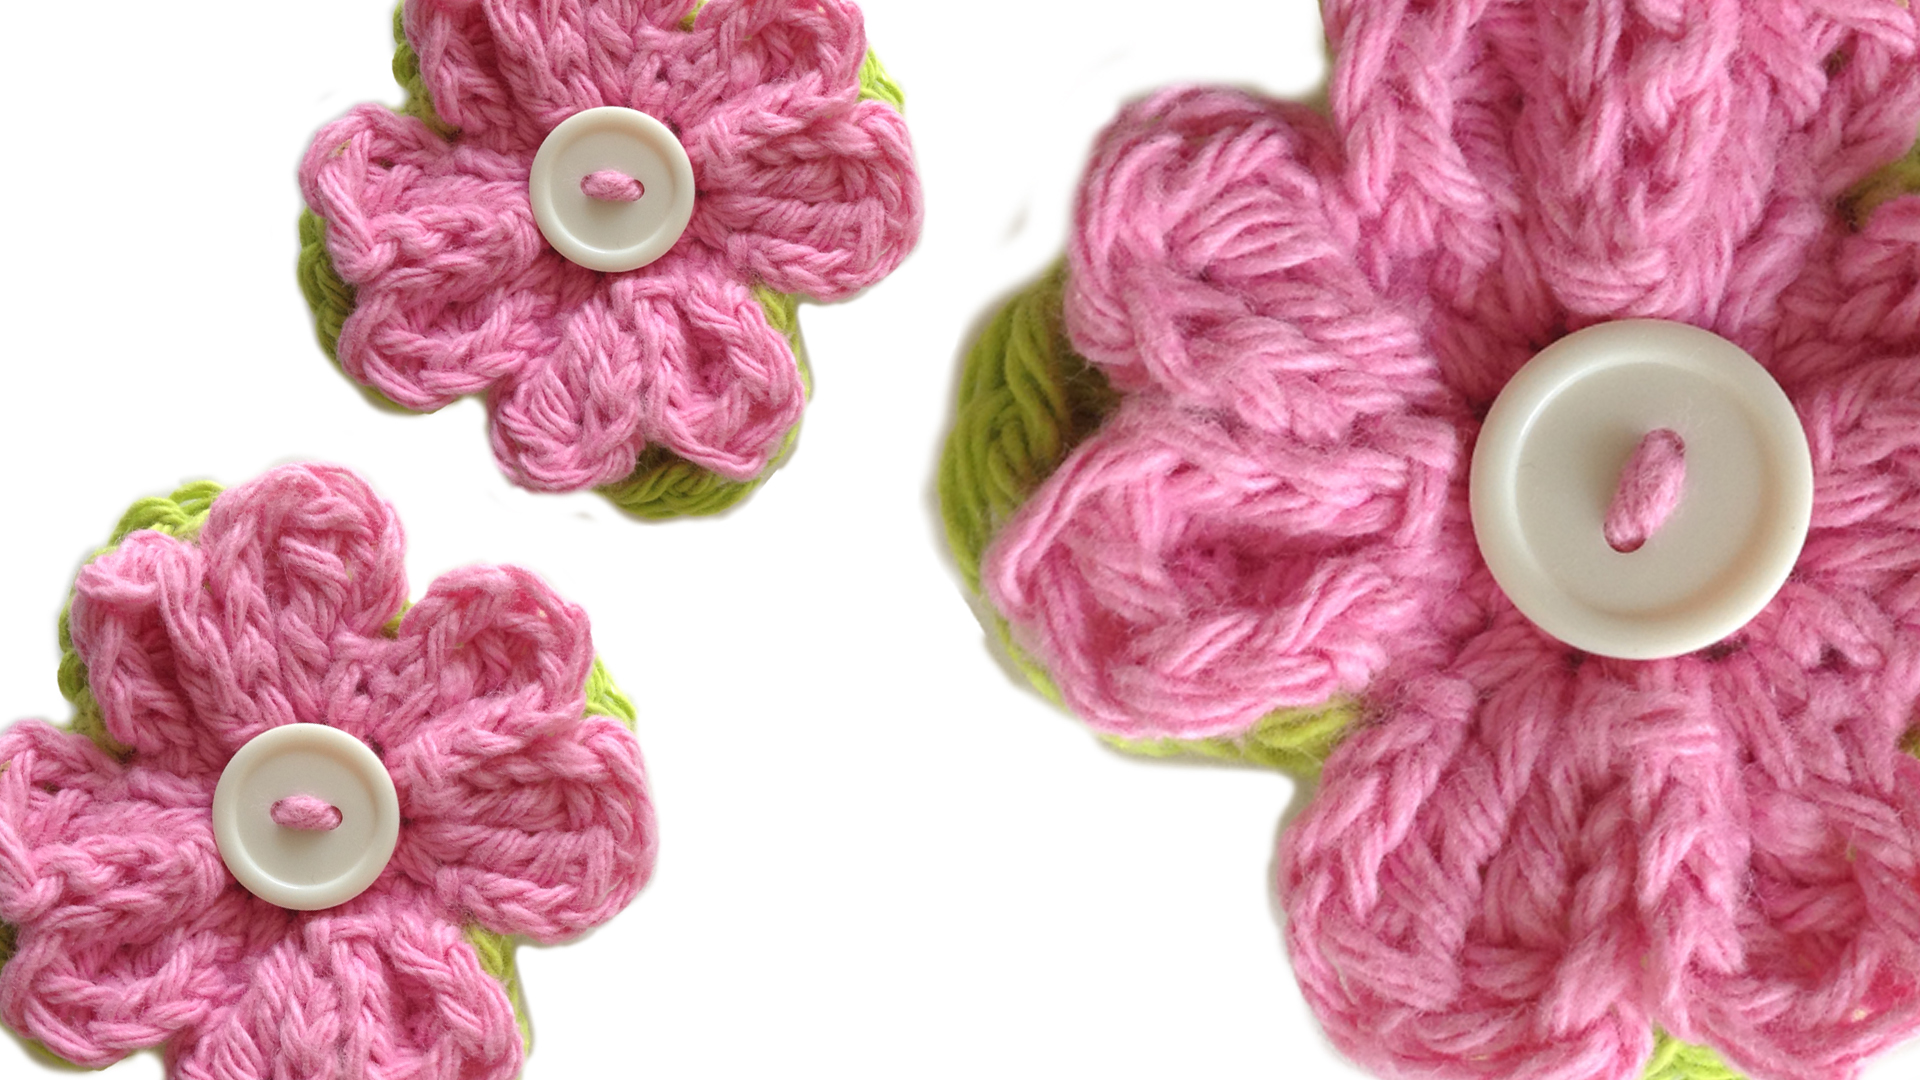 maggies-crochet-pretty-posey-free-pattern-close-up